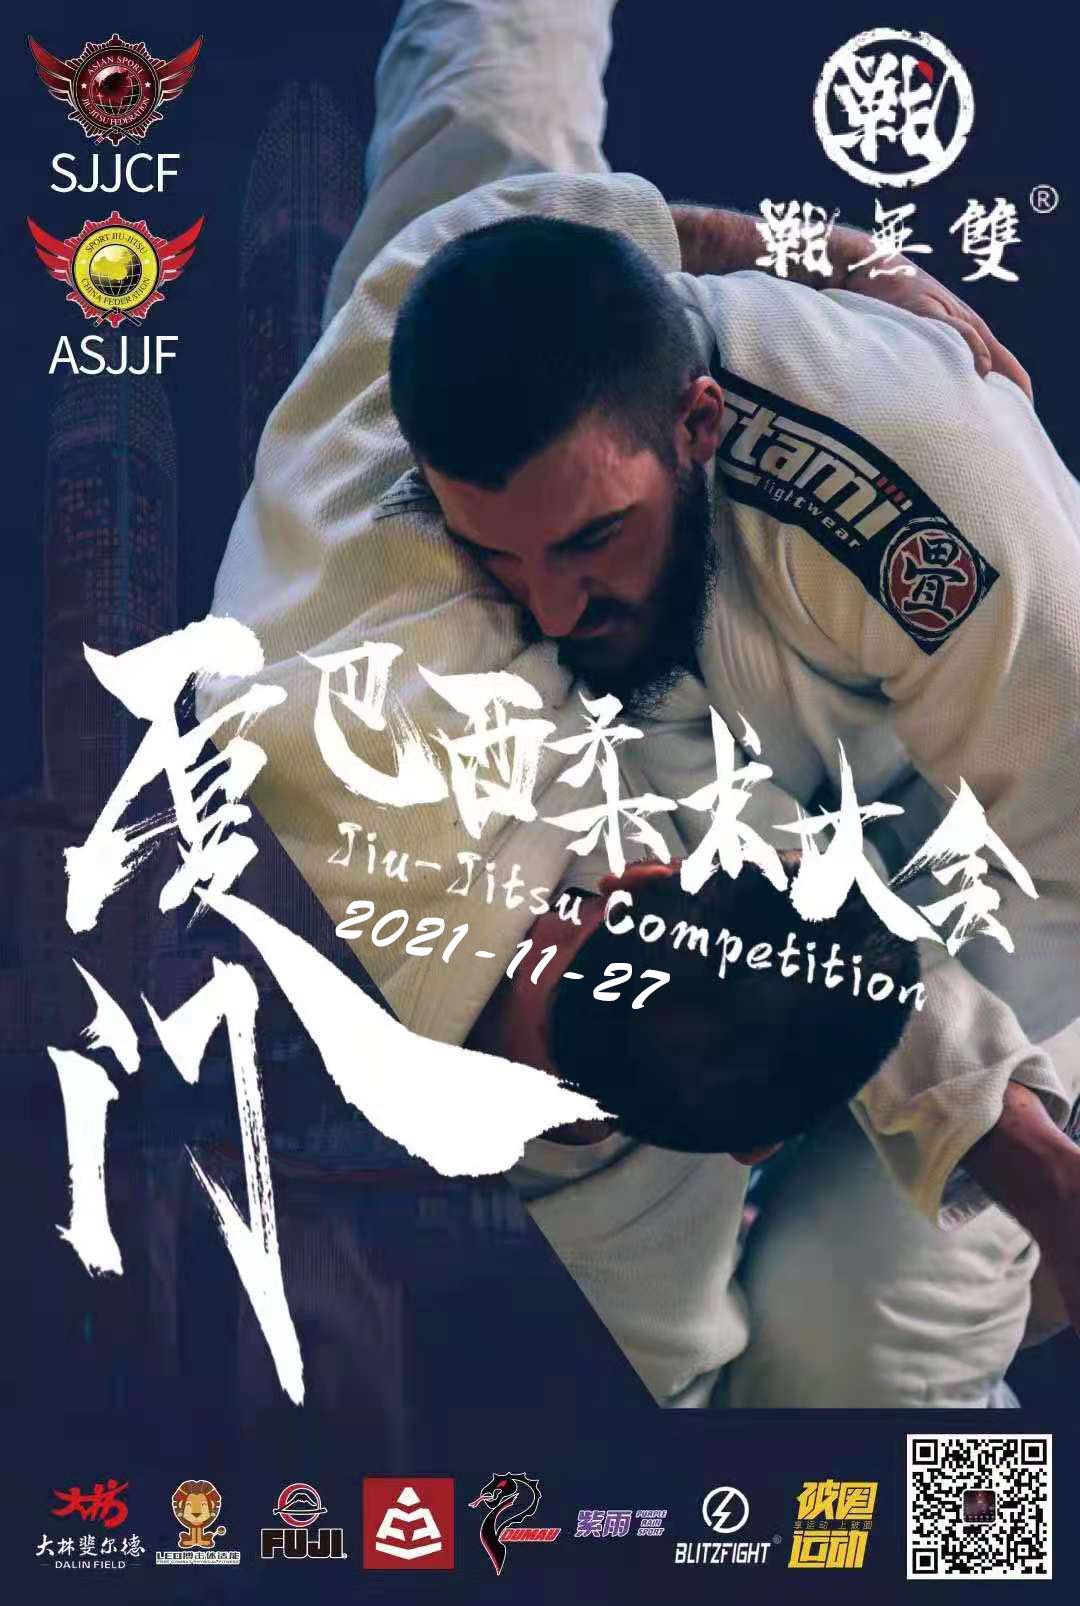 sjjcf xiamen jiu jitsu championship 2021